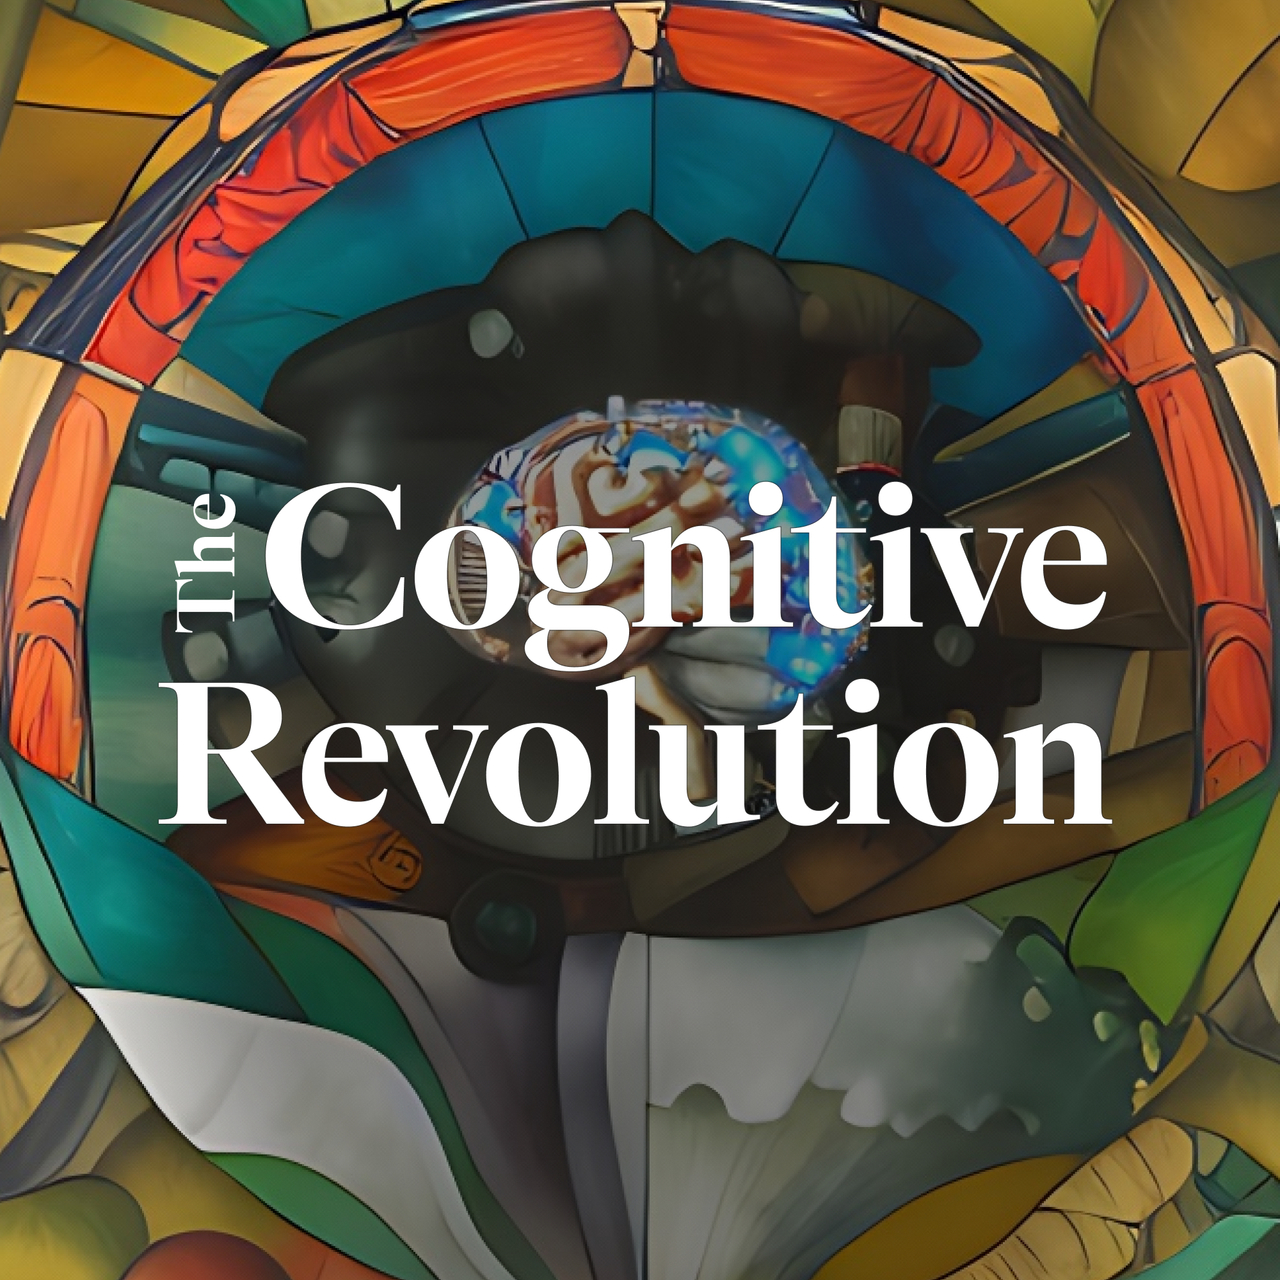 The Cognitive Revolution